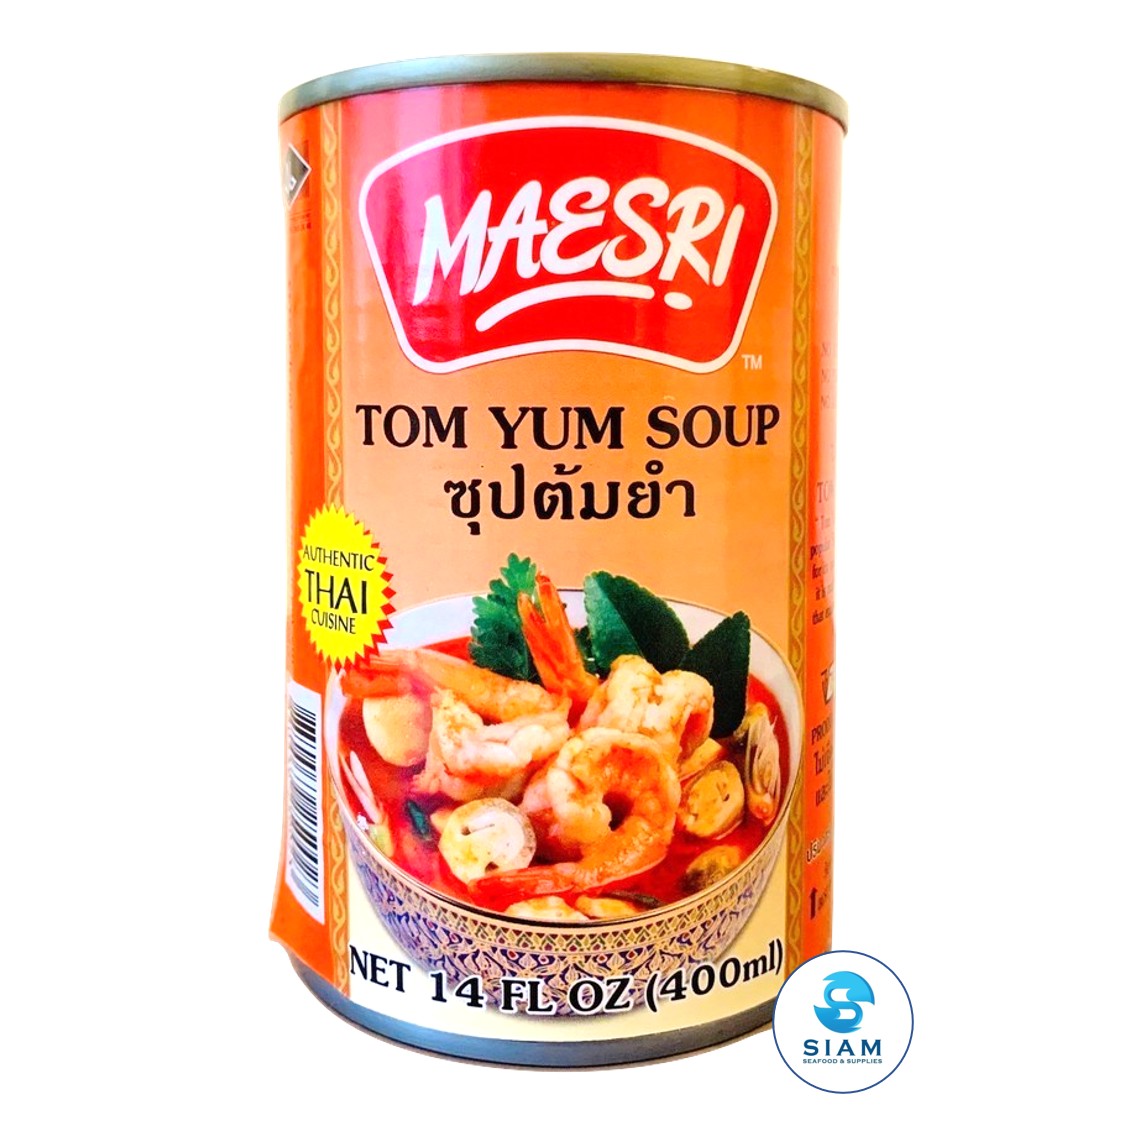 (Case) Tom Yum Soup, Ready to Cook - MaeSri (14 oz x 12 per case) ซุปต้มยำสำเร็จรูป แม่ศรี แบบยกลัง MaeSri